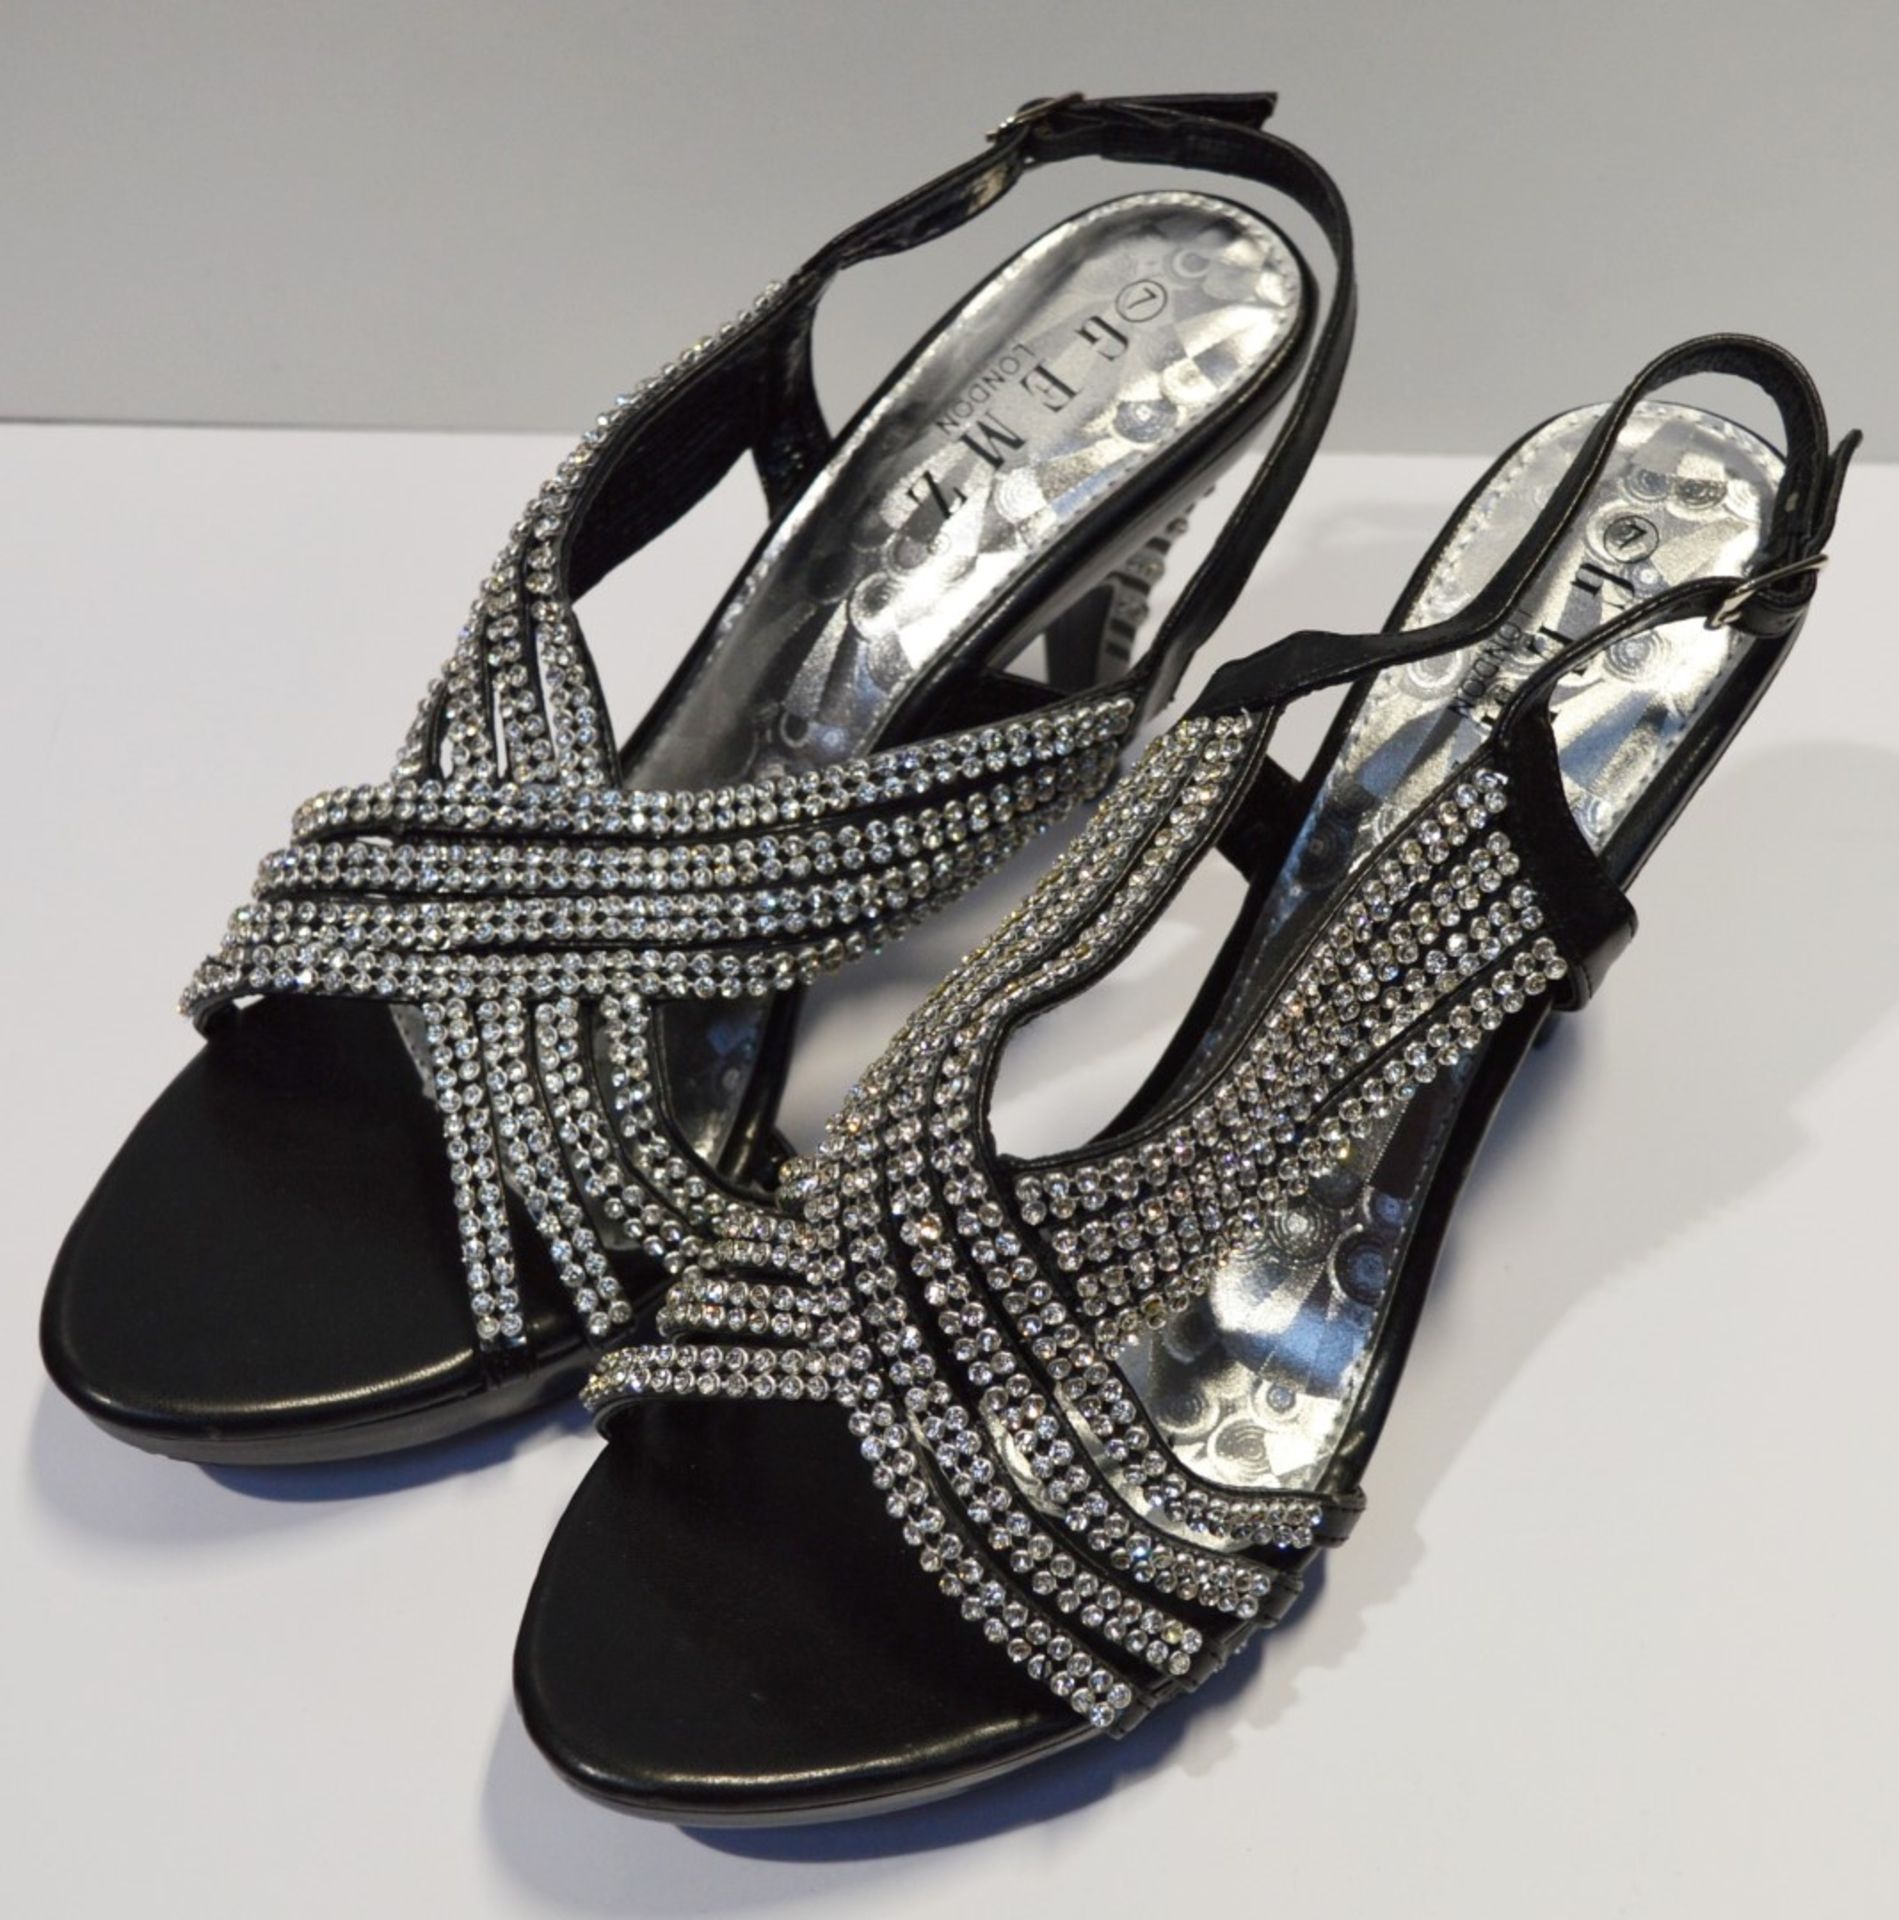 1 x Pair of Gemz London Ladies High Heel Diamante Evening Shoes - Size 7 - Unused Stock - CL214 - - Image 5 of 11